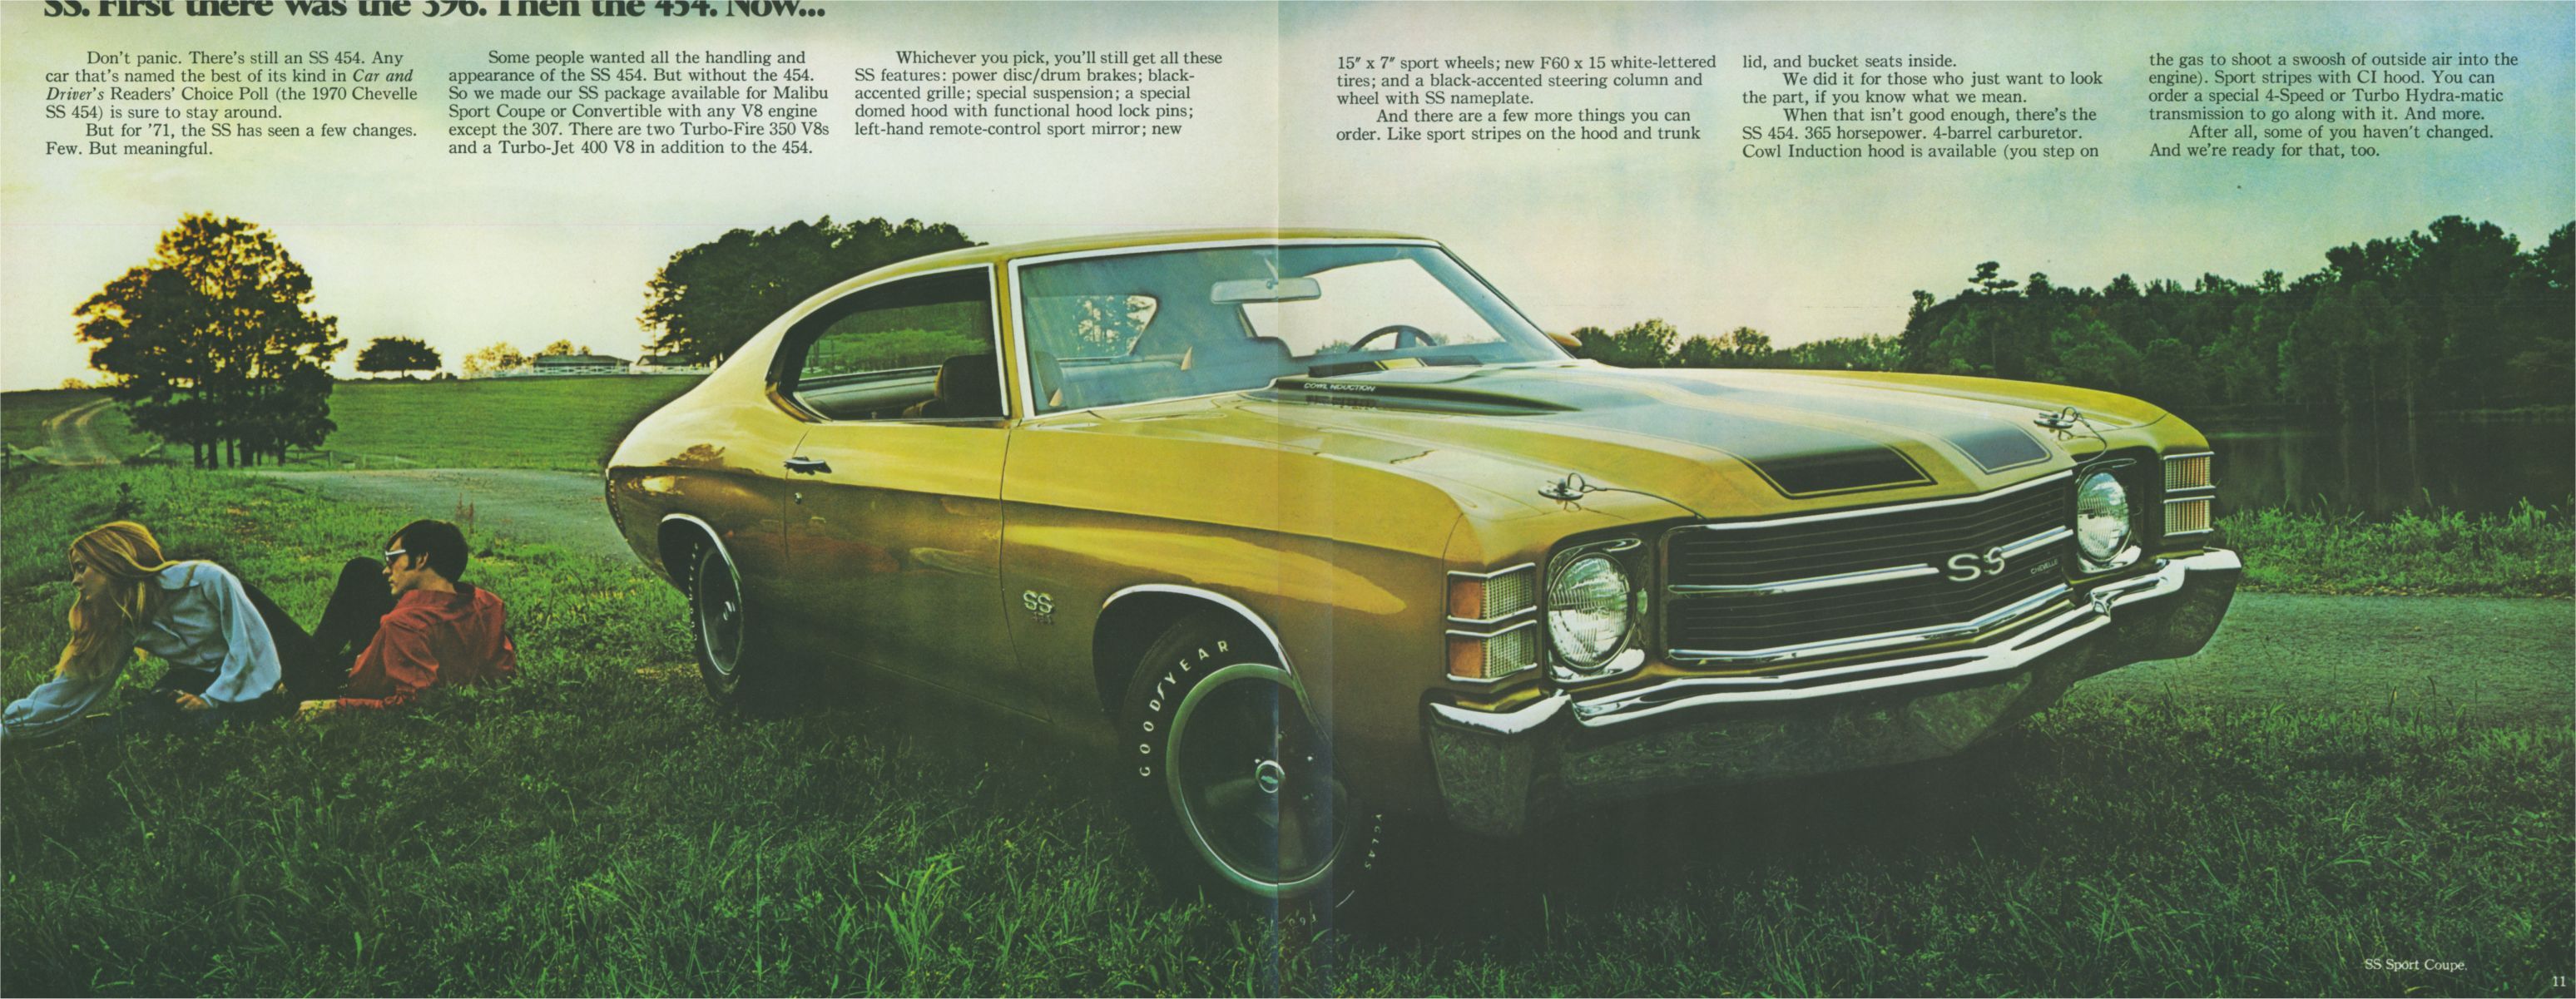 1971 Chev Chevelle Brochure Page 4